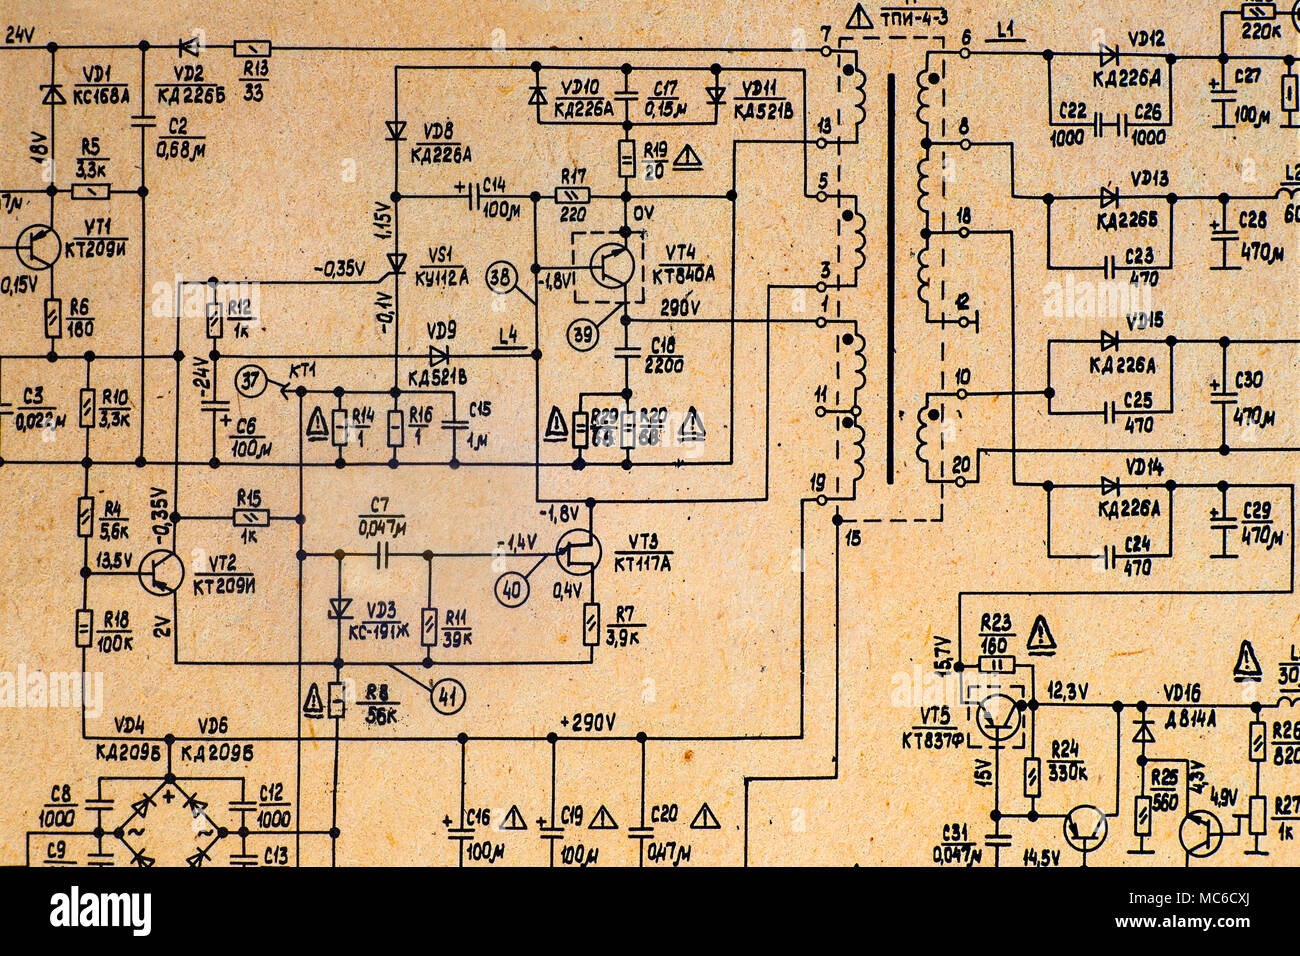 Electronic schematic diagram of retro television. Stock Photo